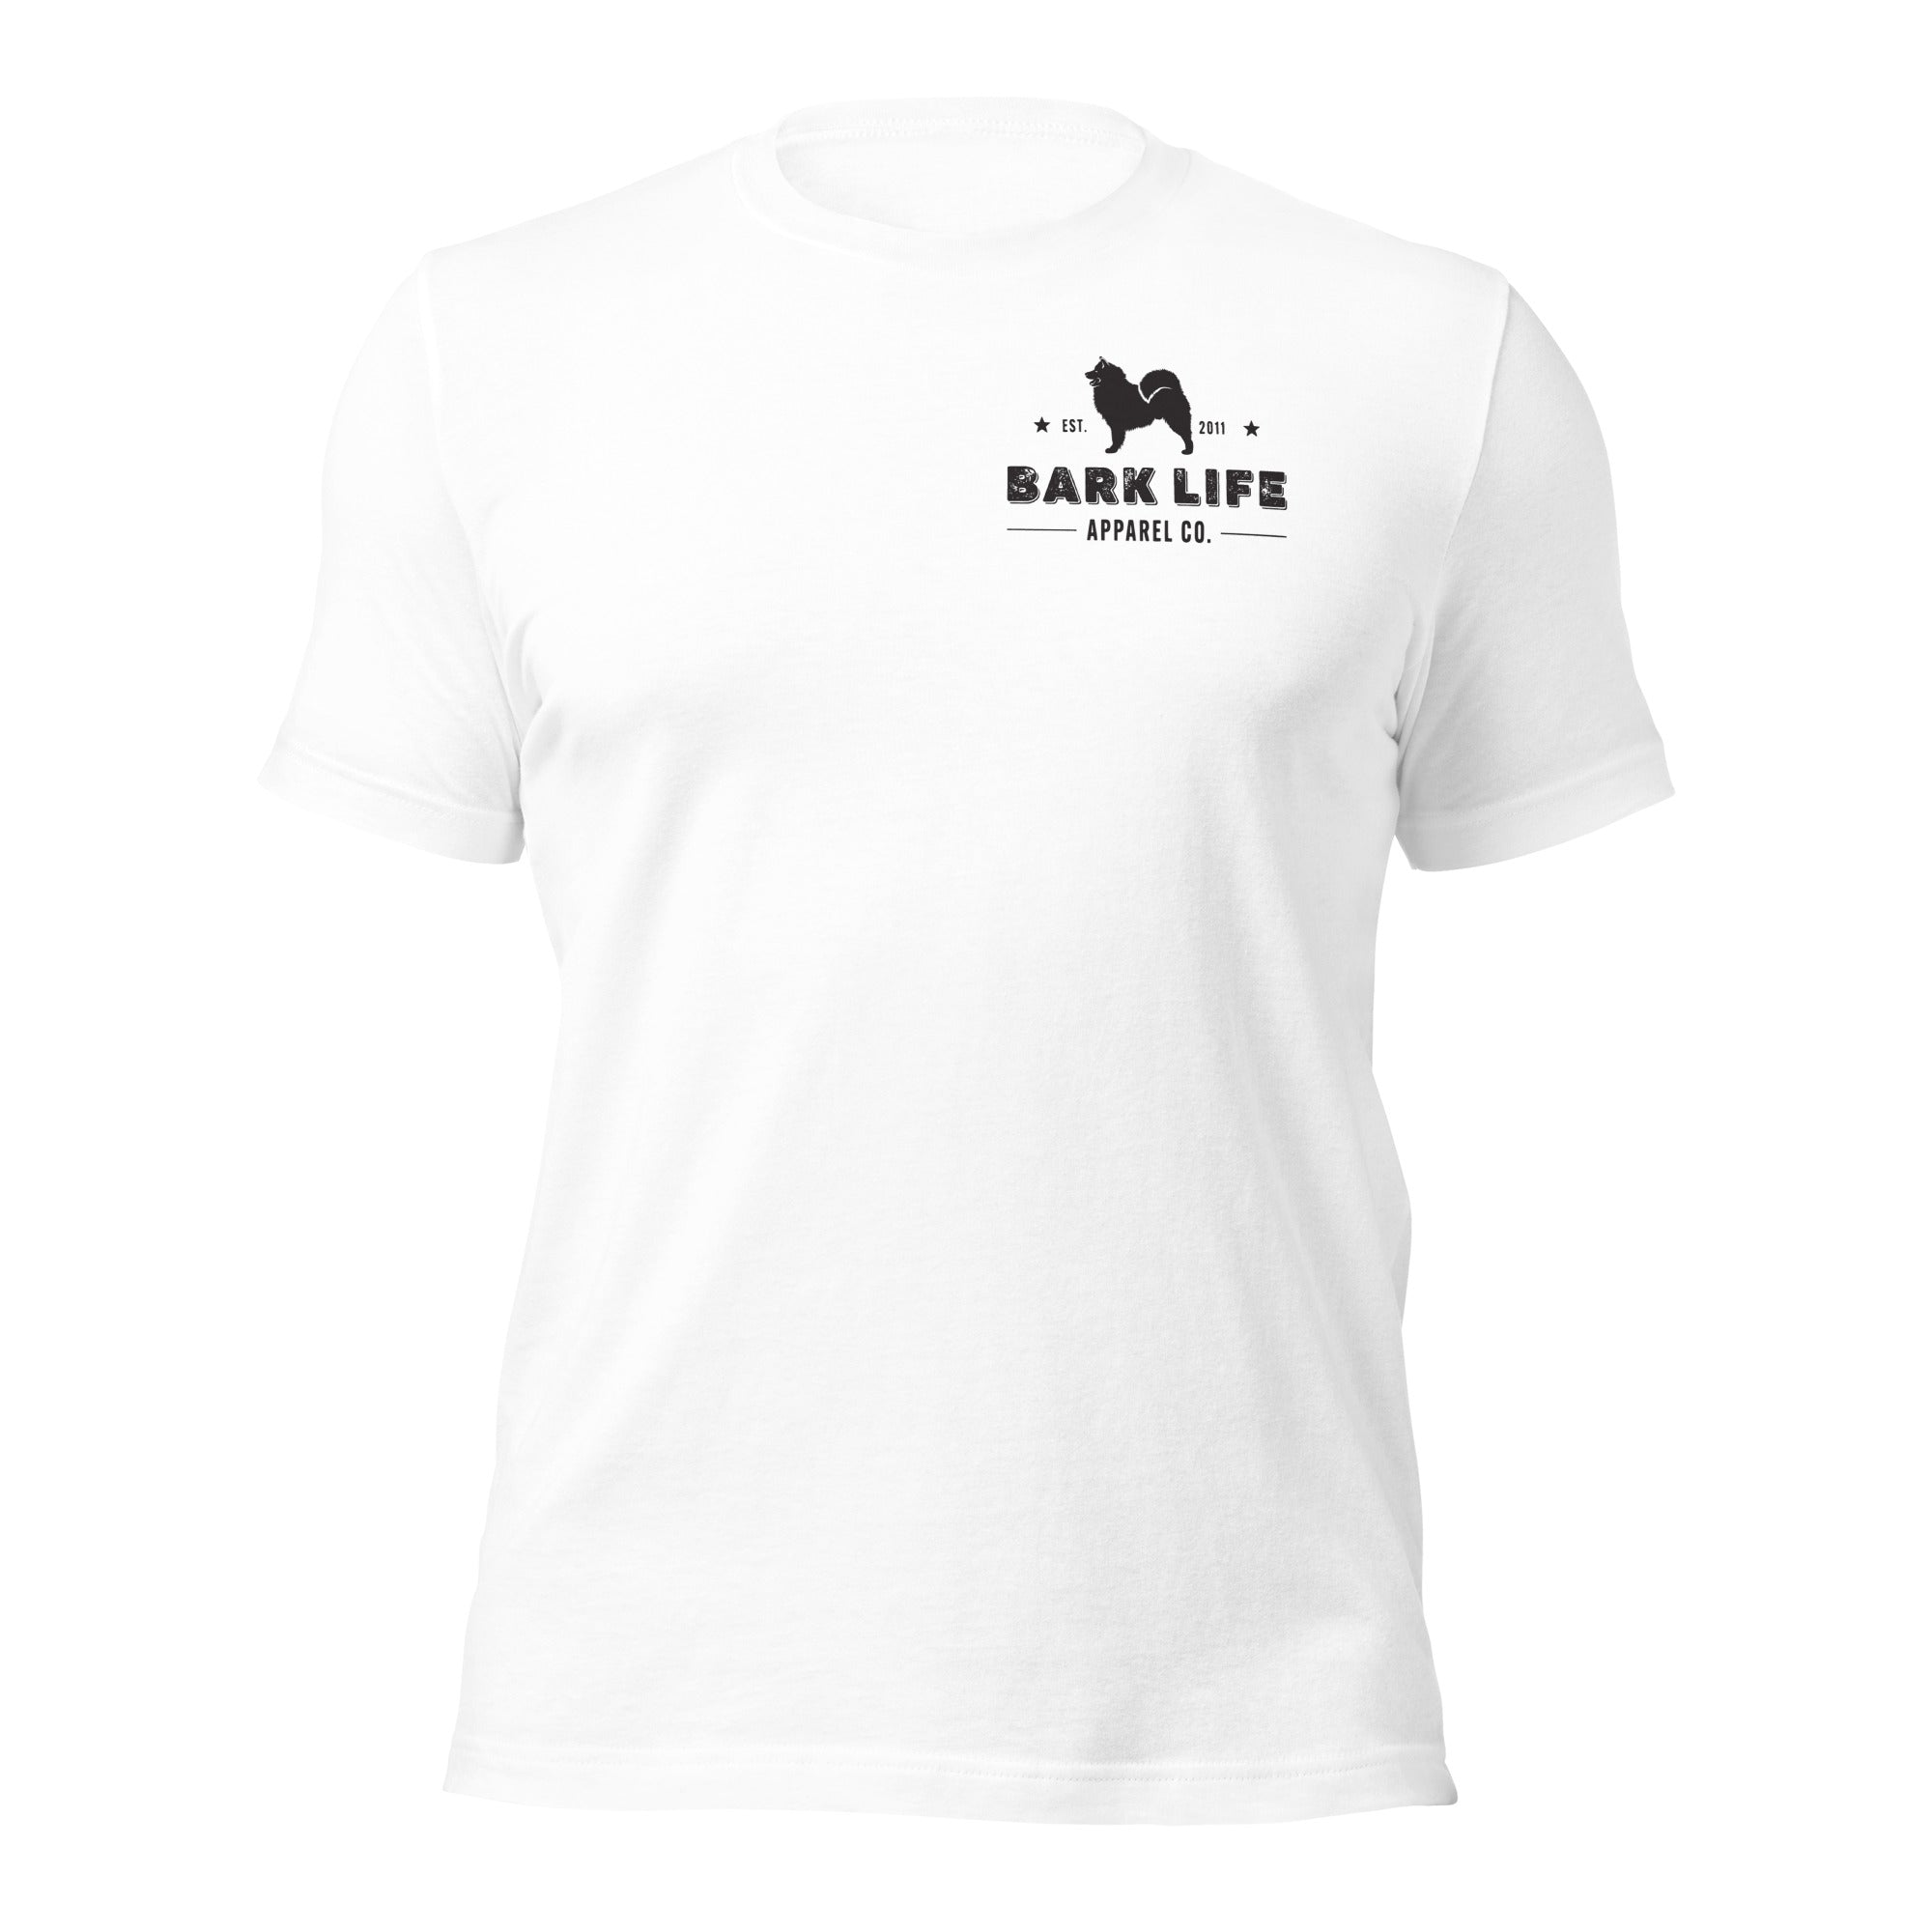 Samoyed - Short Sleeve Cotton Tee Shirt